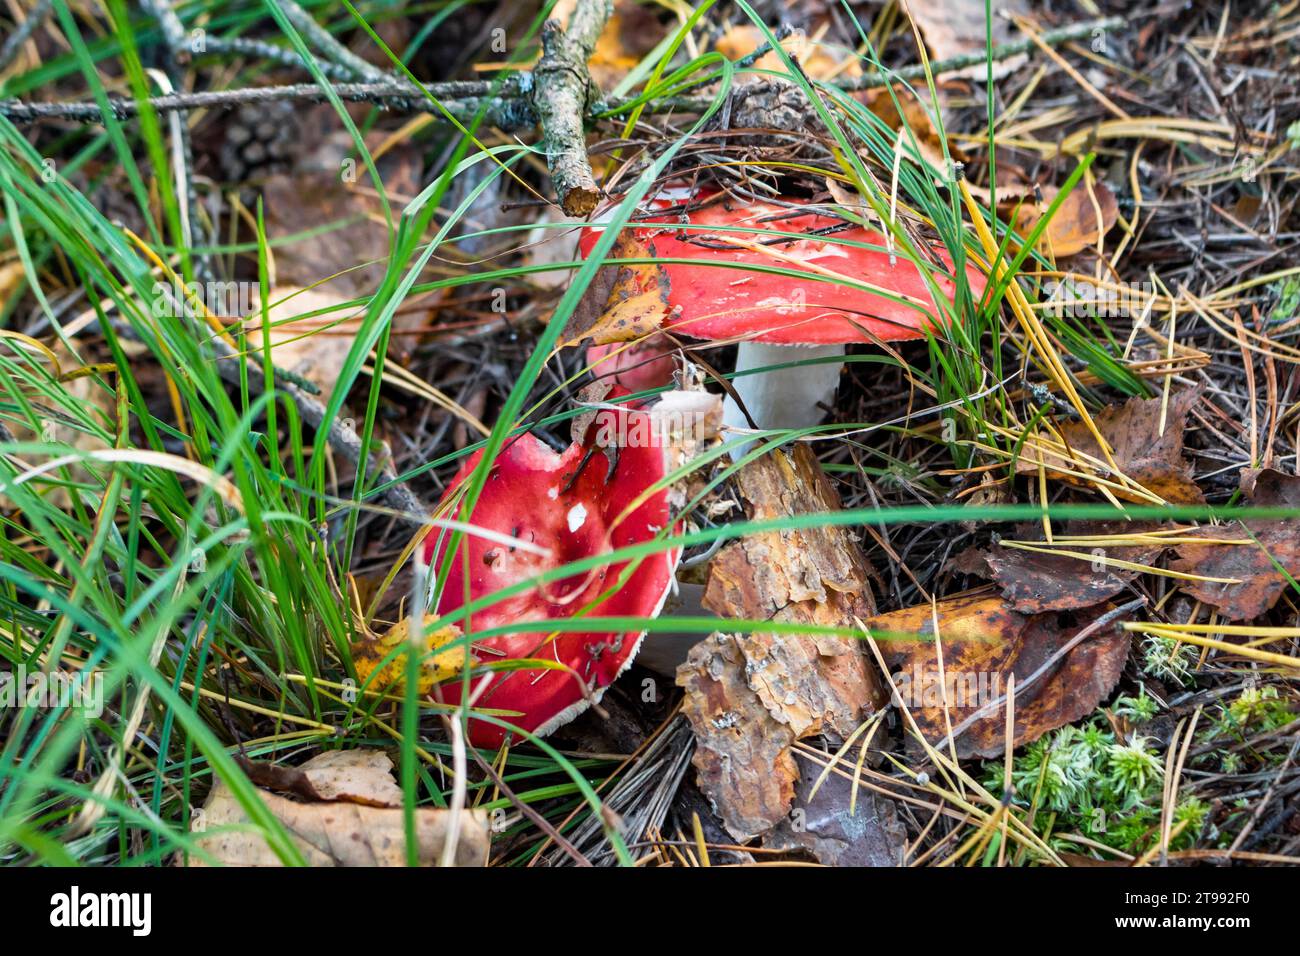 Russula-Pilze mit roter Kappe versteckt sich im Gras Stockfoto